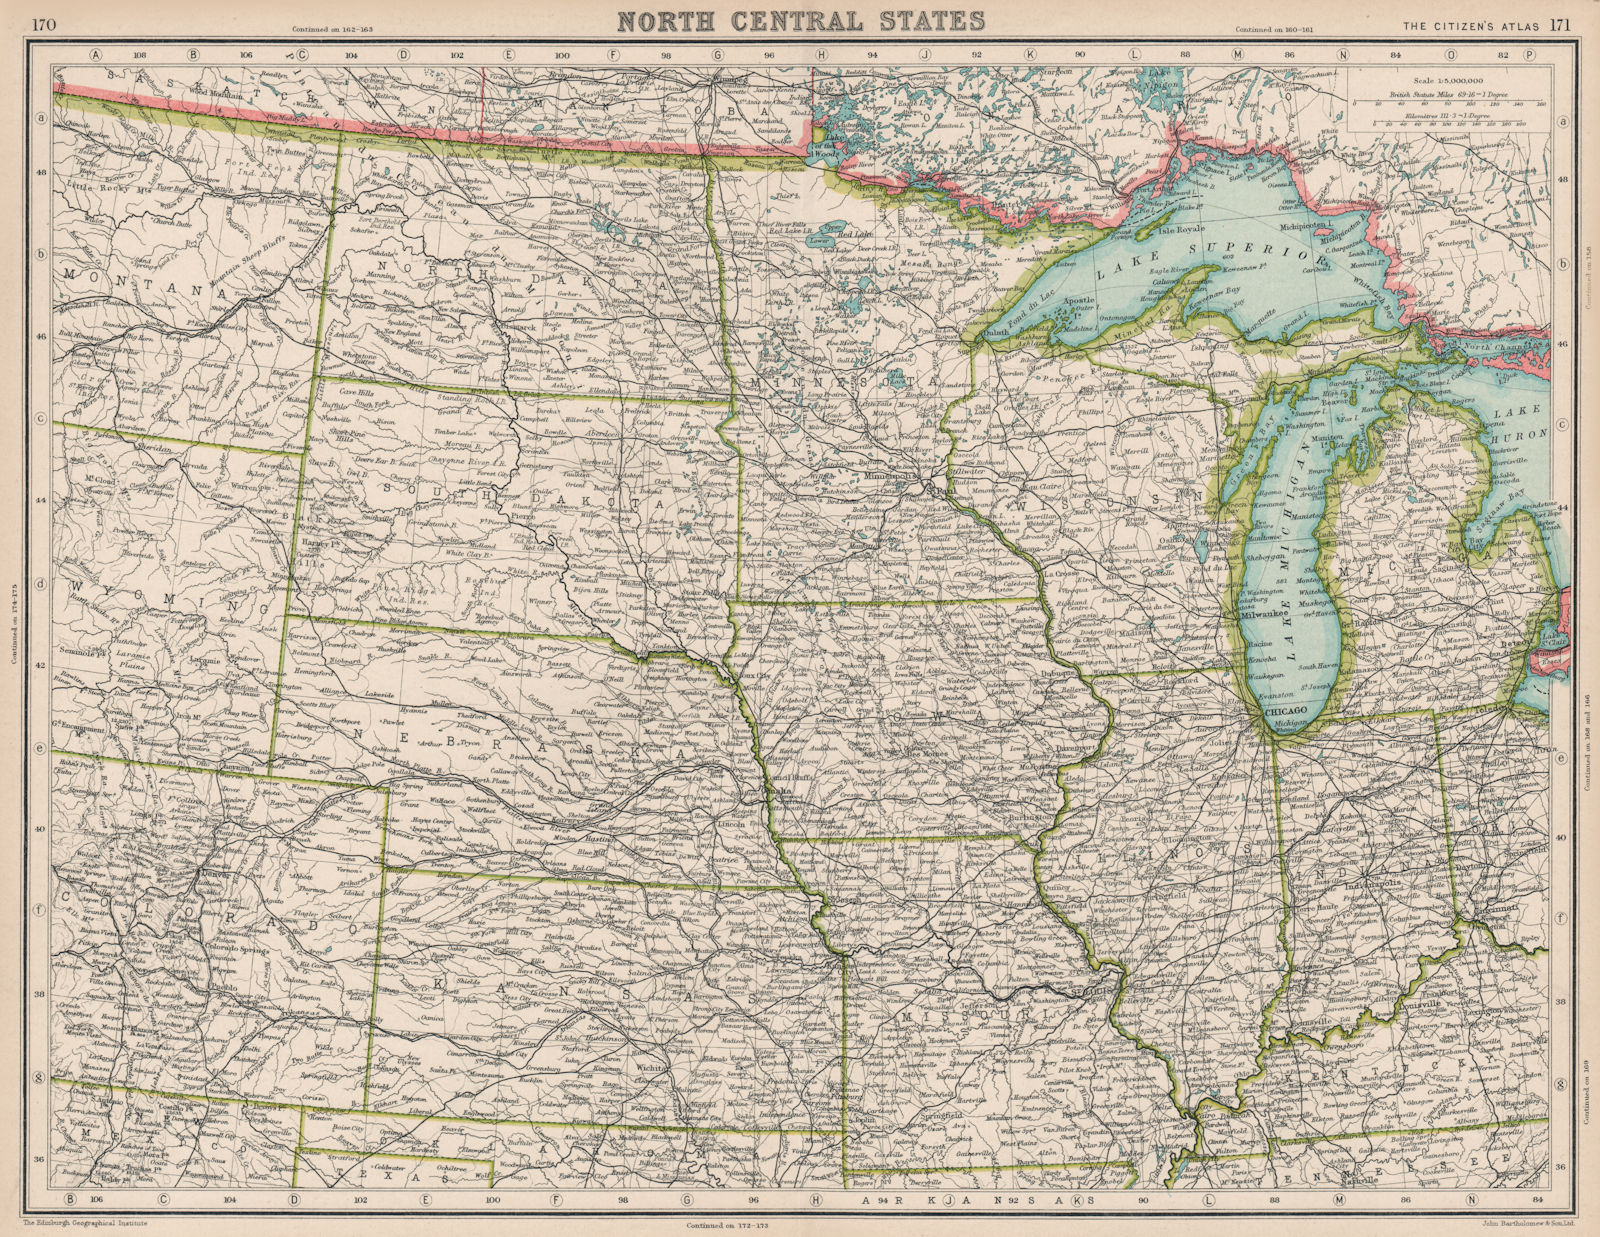 USA MIDWEST. ND SD MI WI Michigan Indiana Illinois Iowa MI NE Kansas 1924 map